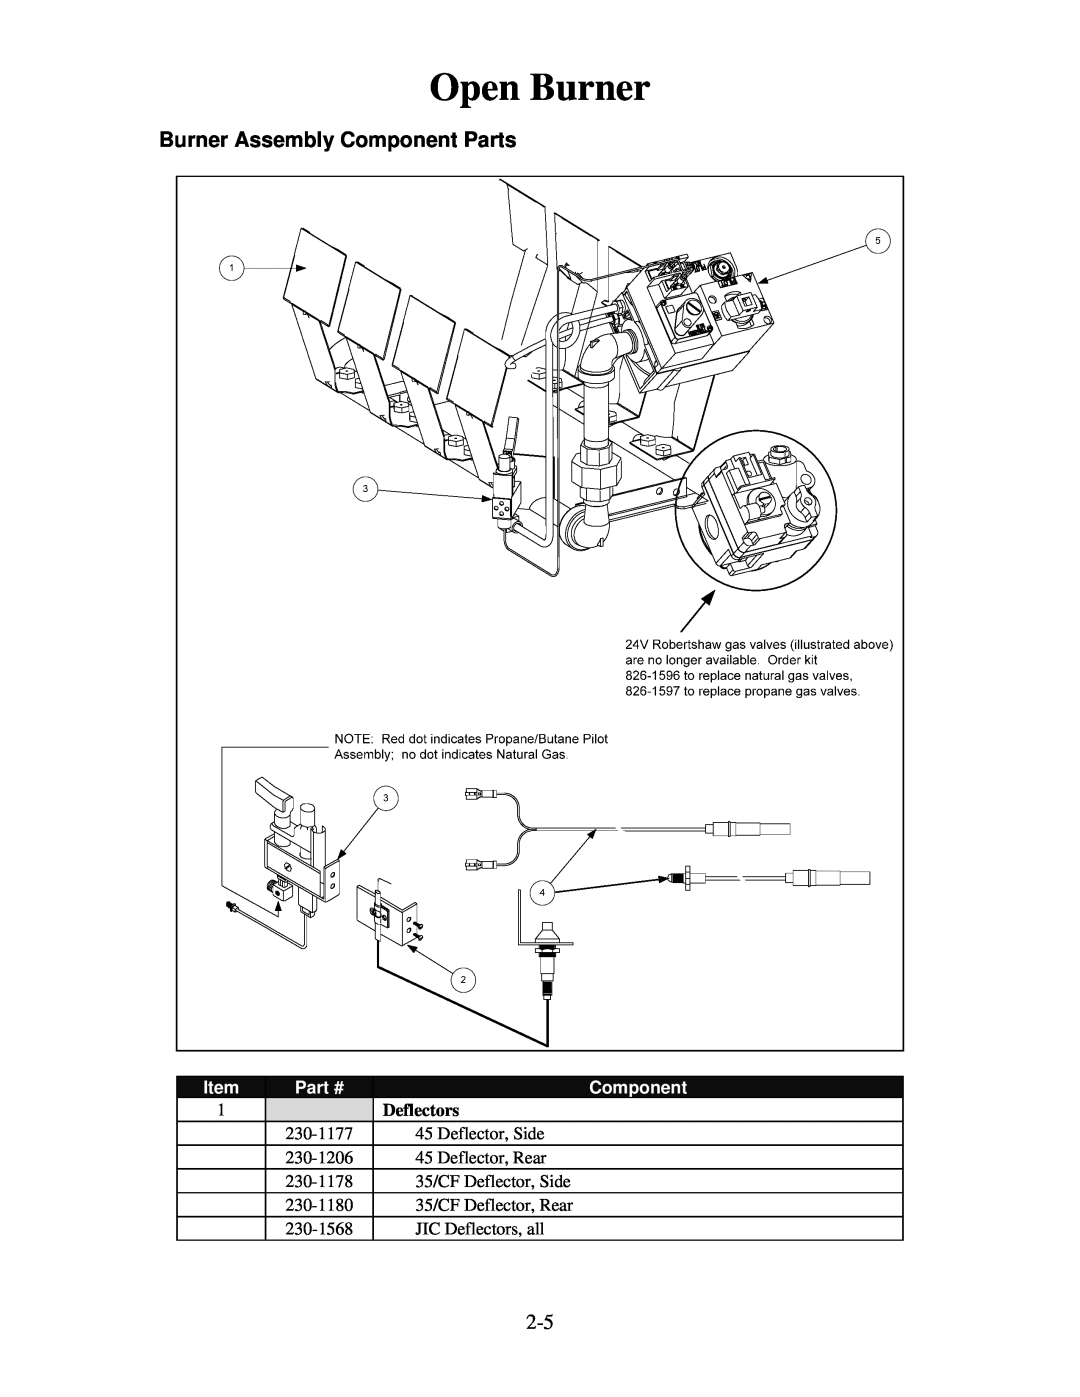 Frymaster 8196321 manual Open Burner, Burner Assembly Component Parts, Deflectors 